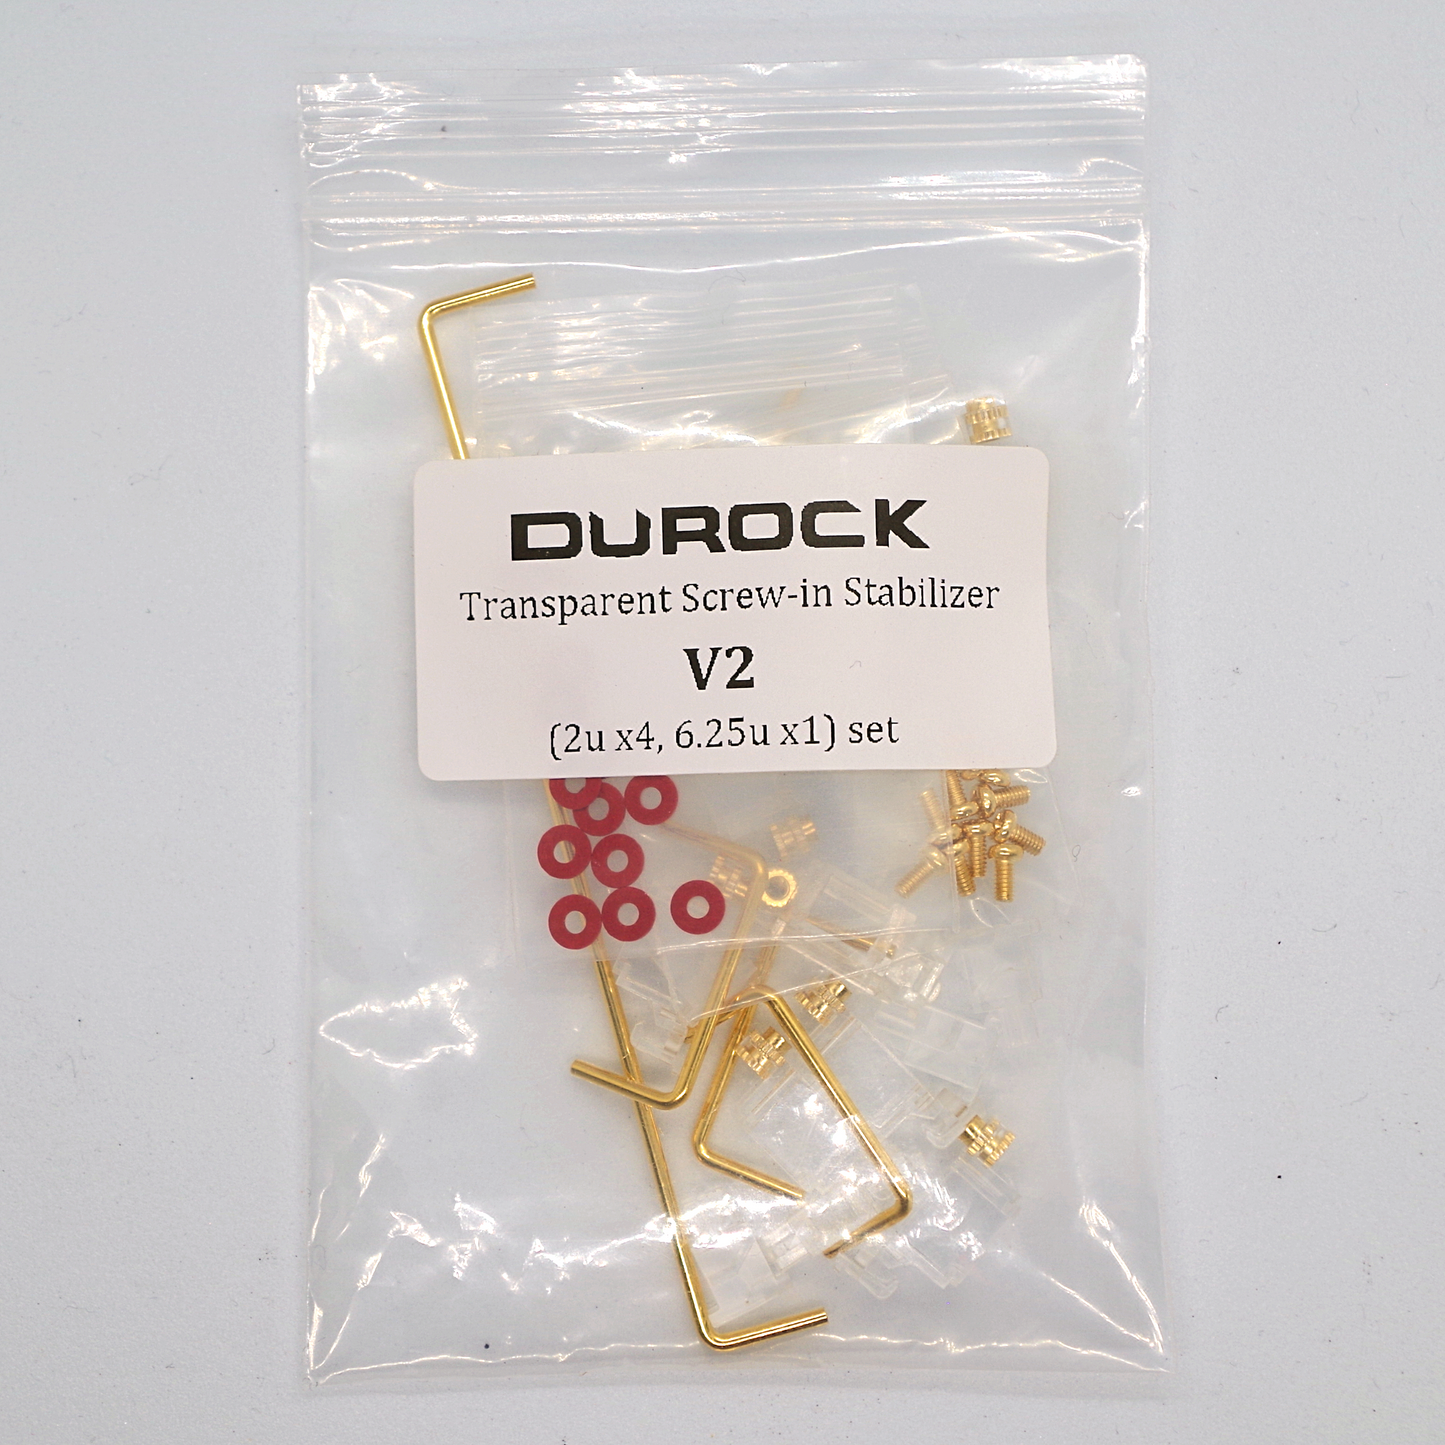 Durock v2 Stabilizers